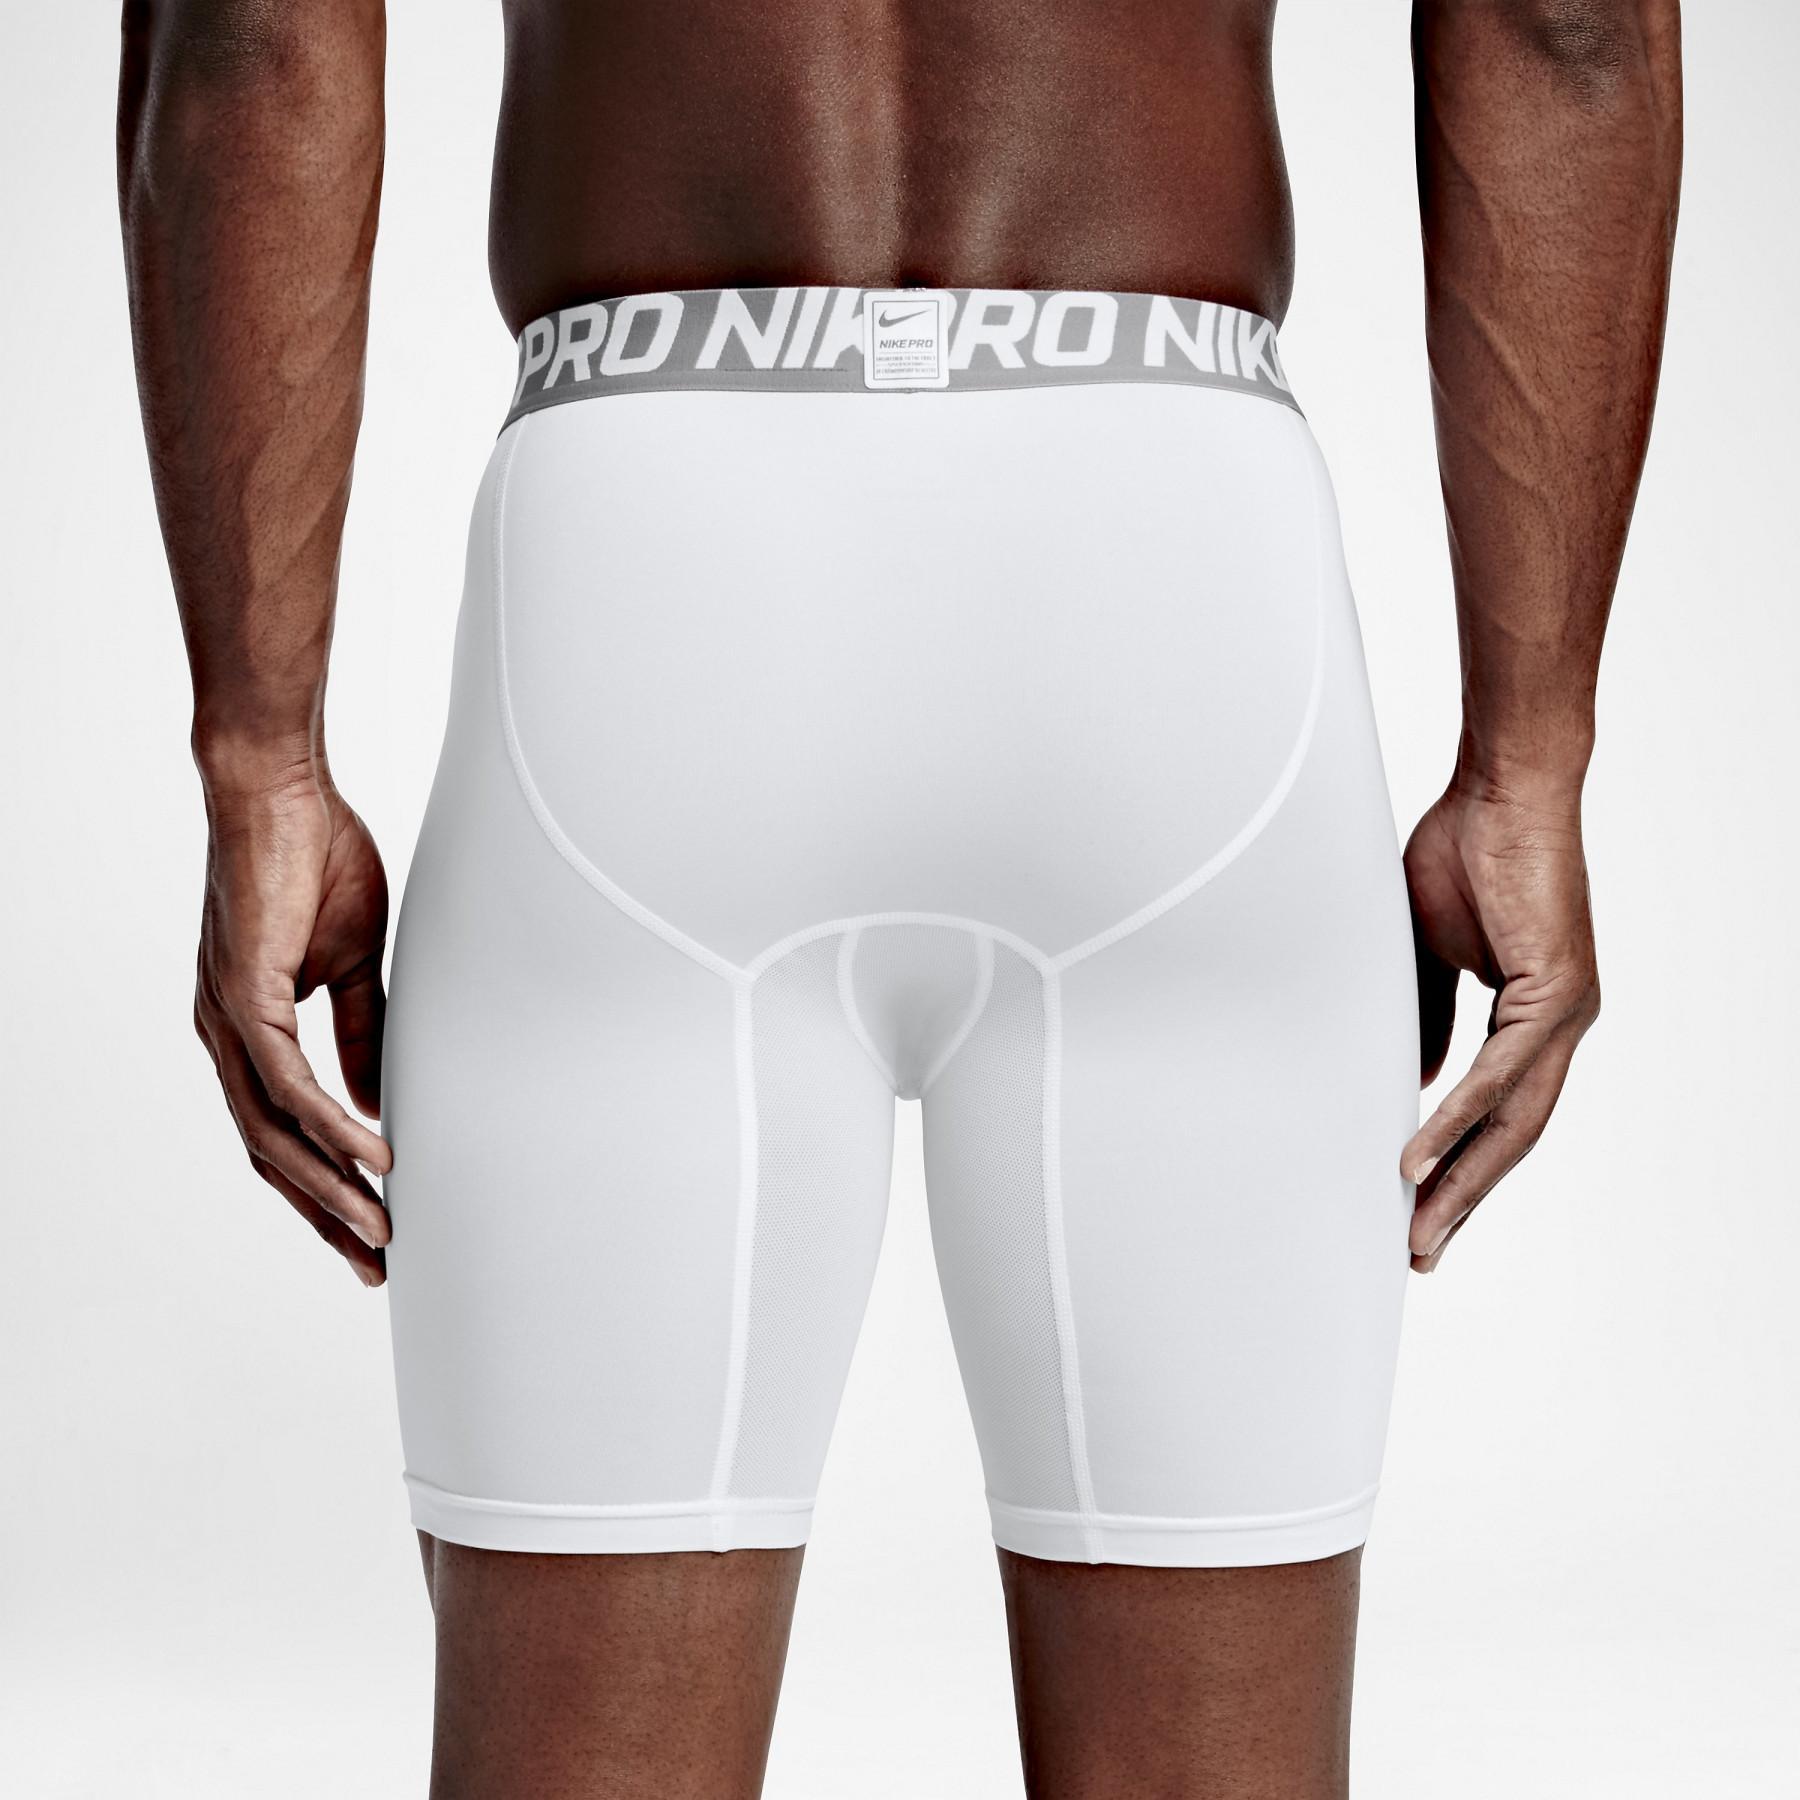 Compression shorts Nike Pro